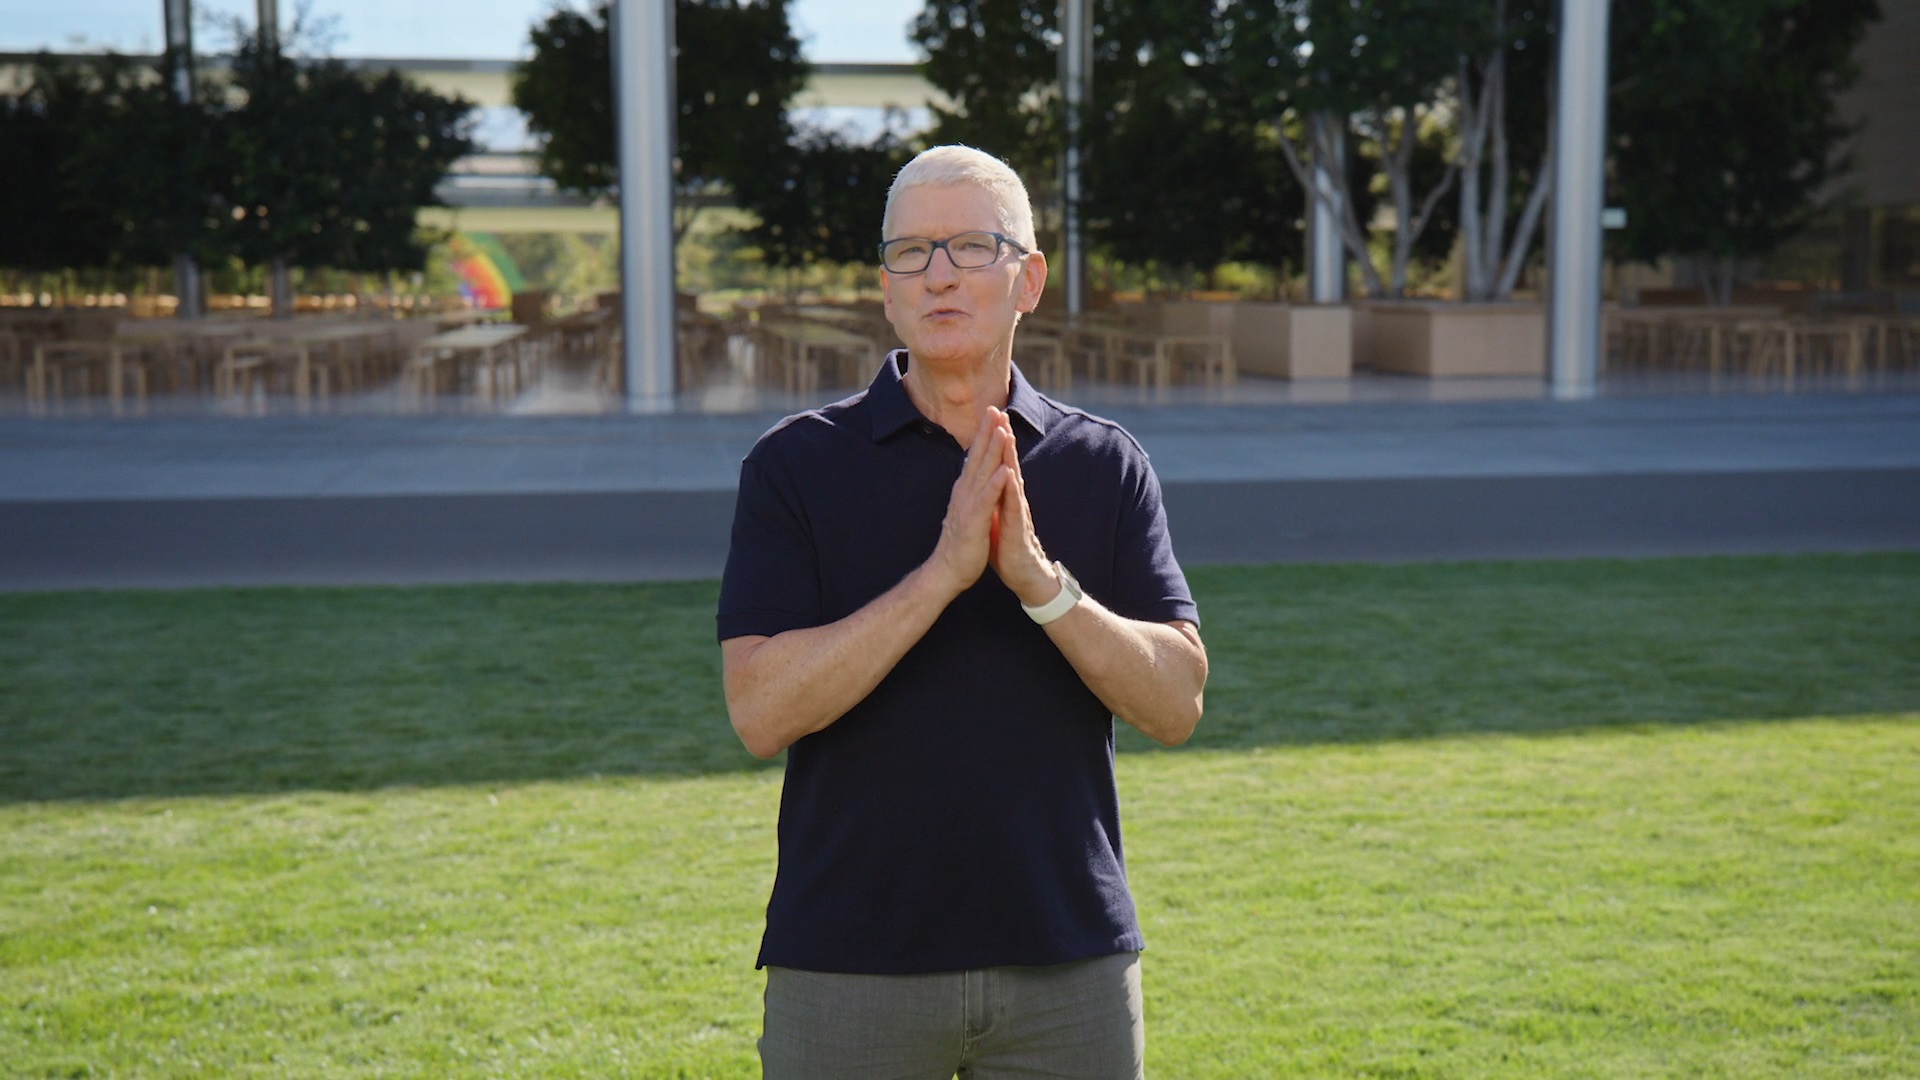 Tim Cook during an Apple presentation on a grass field.